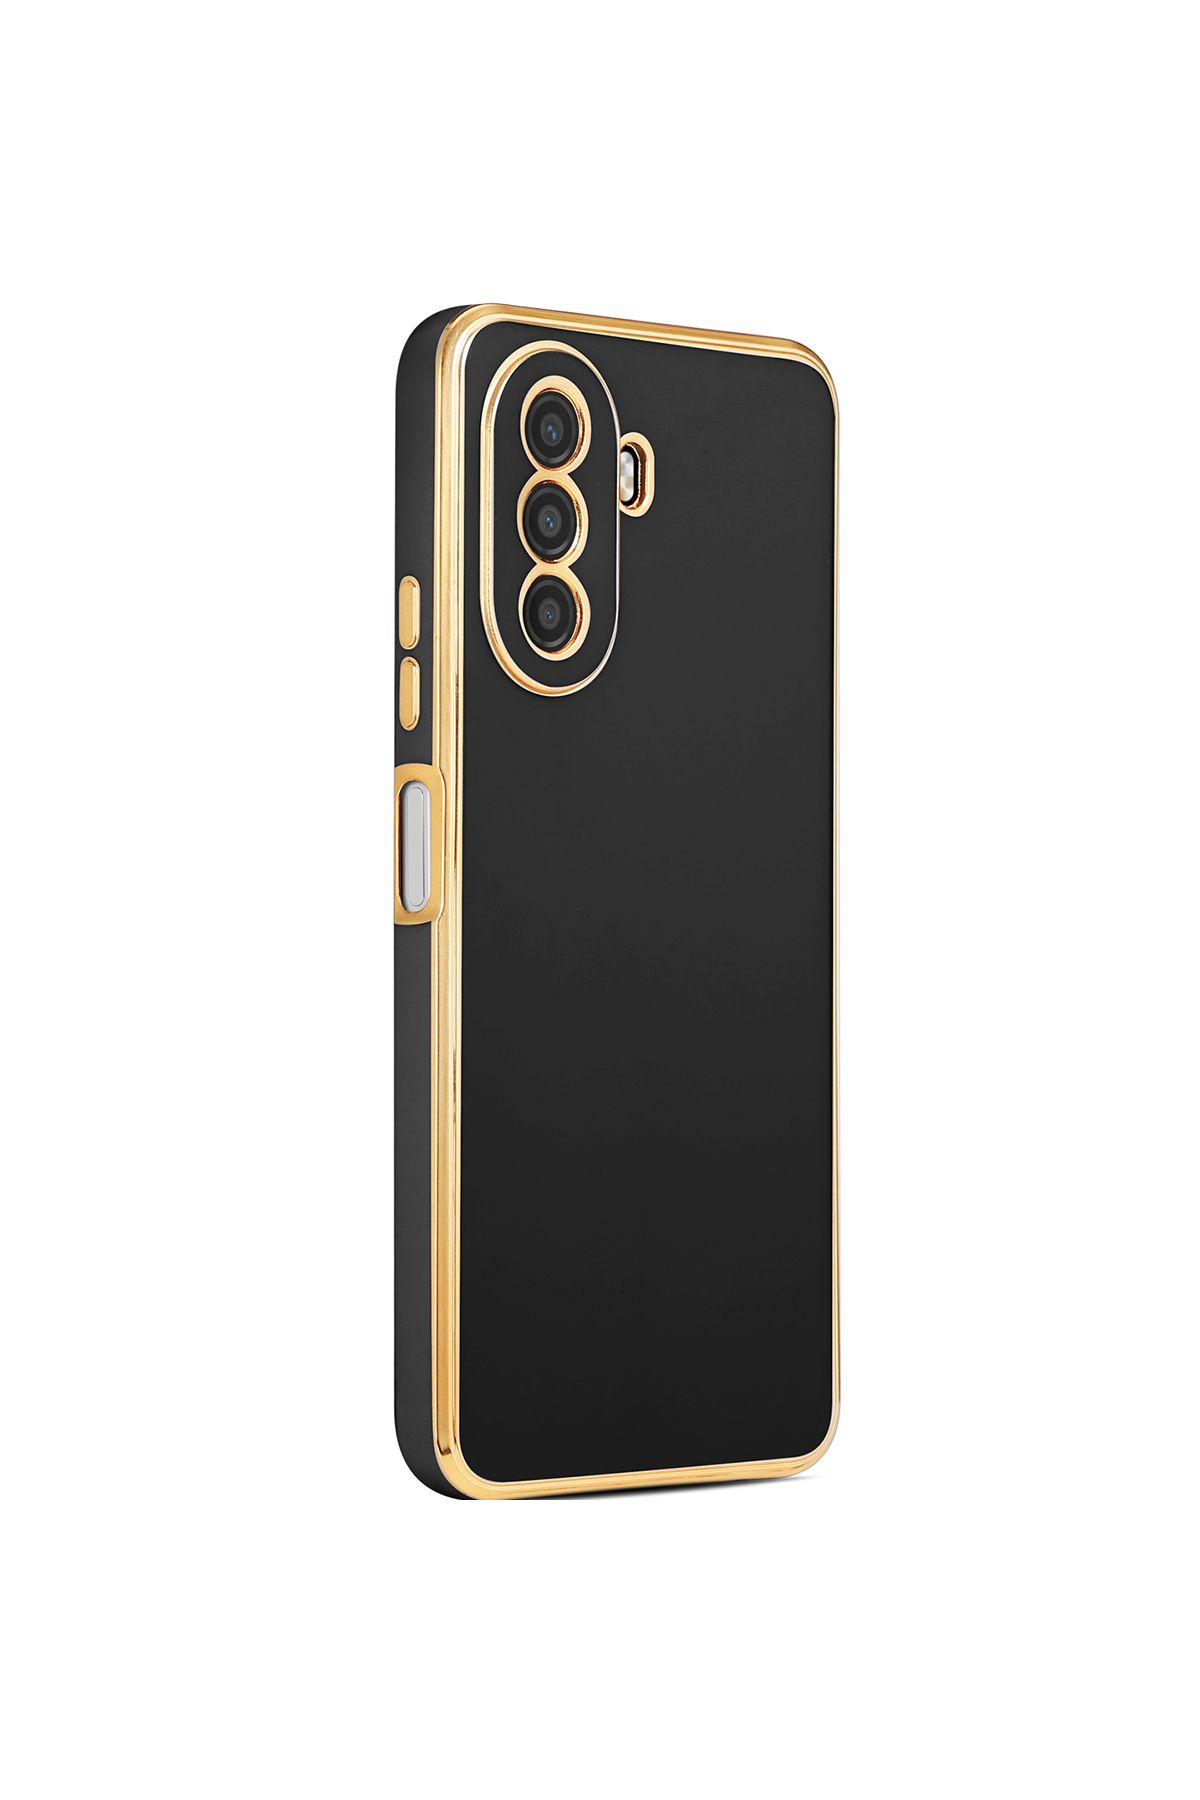 GRABONO Huawei Nova Y70 Birinci Sınıf TPU Kapak, Kenarları Altın Rengi Lüx Kaplamadır.